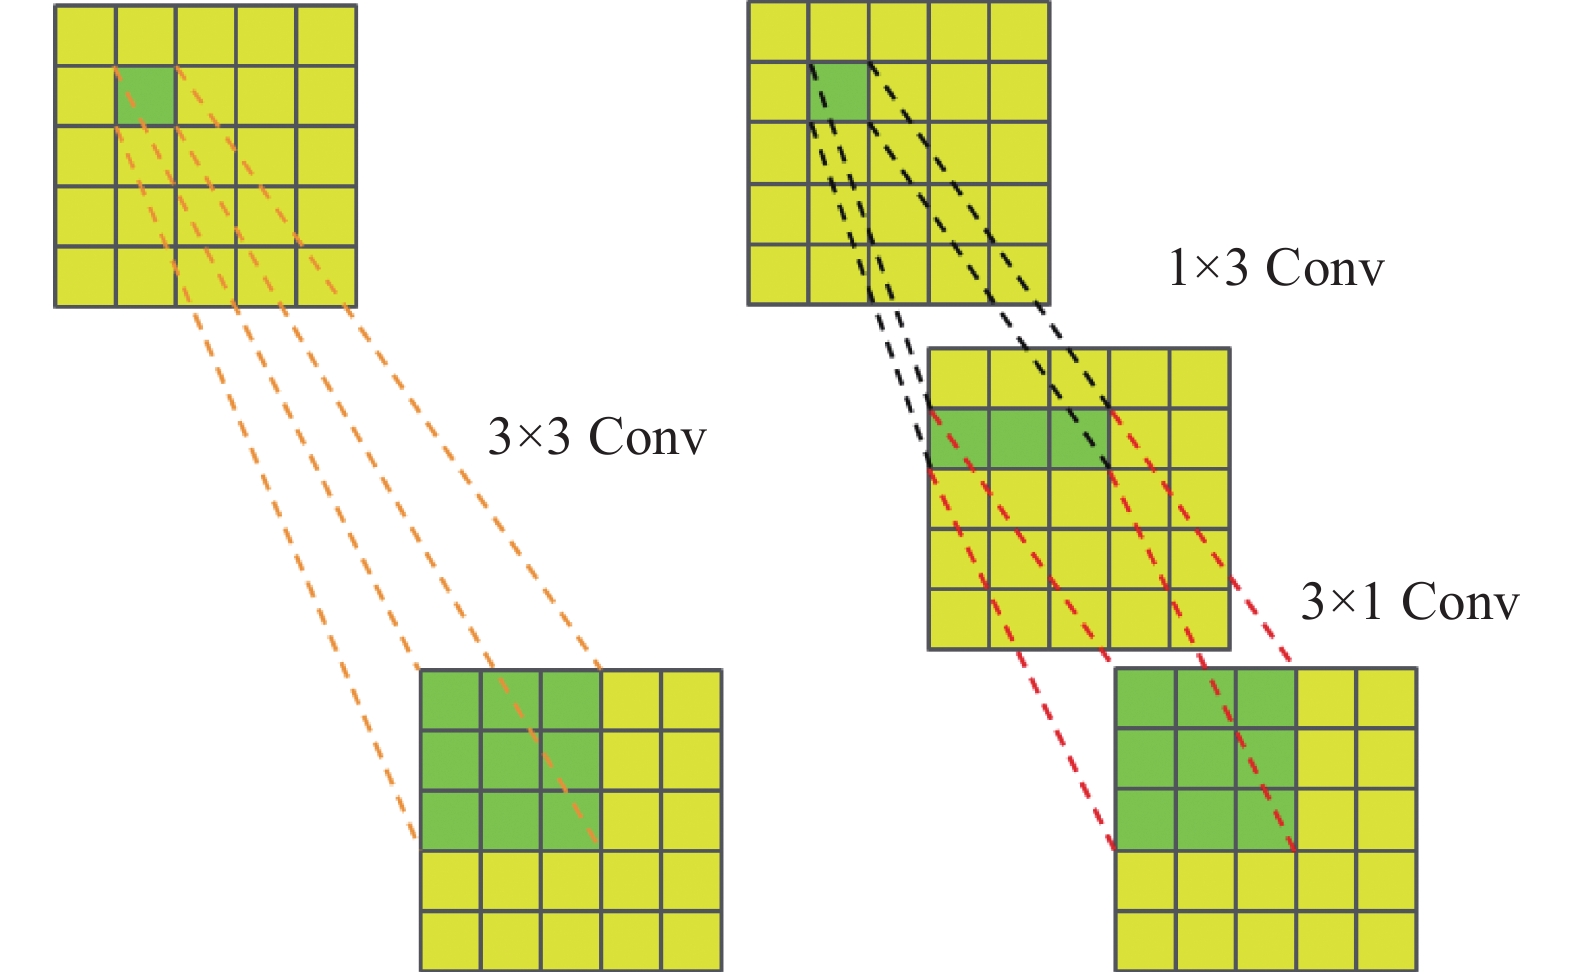 Conventional convolution and asymmetric convolution